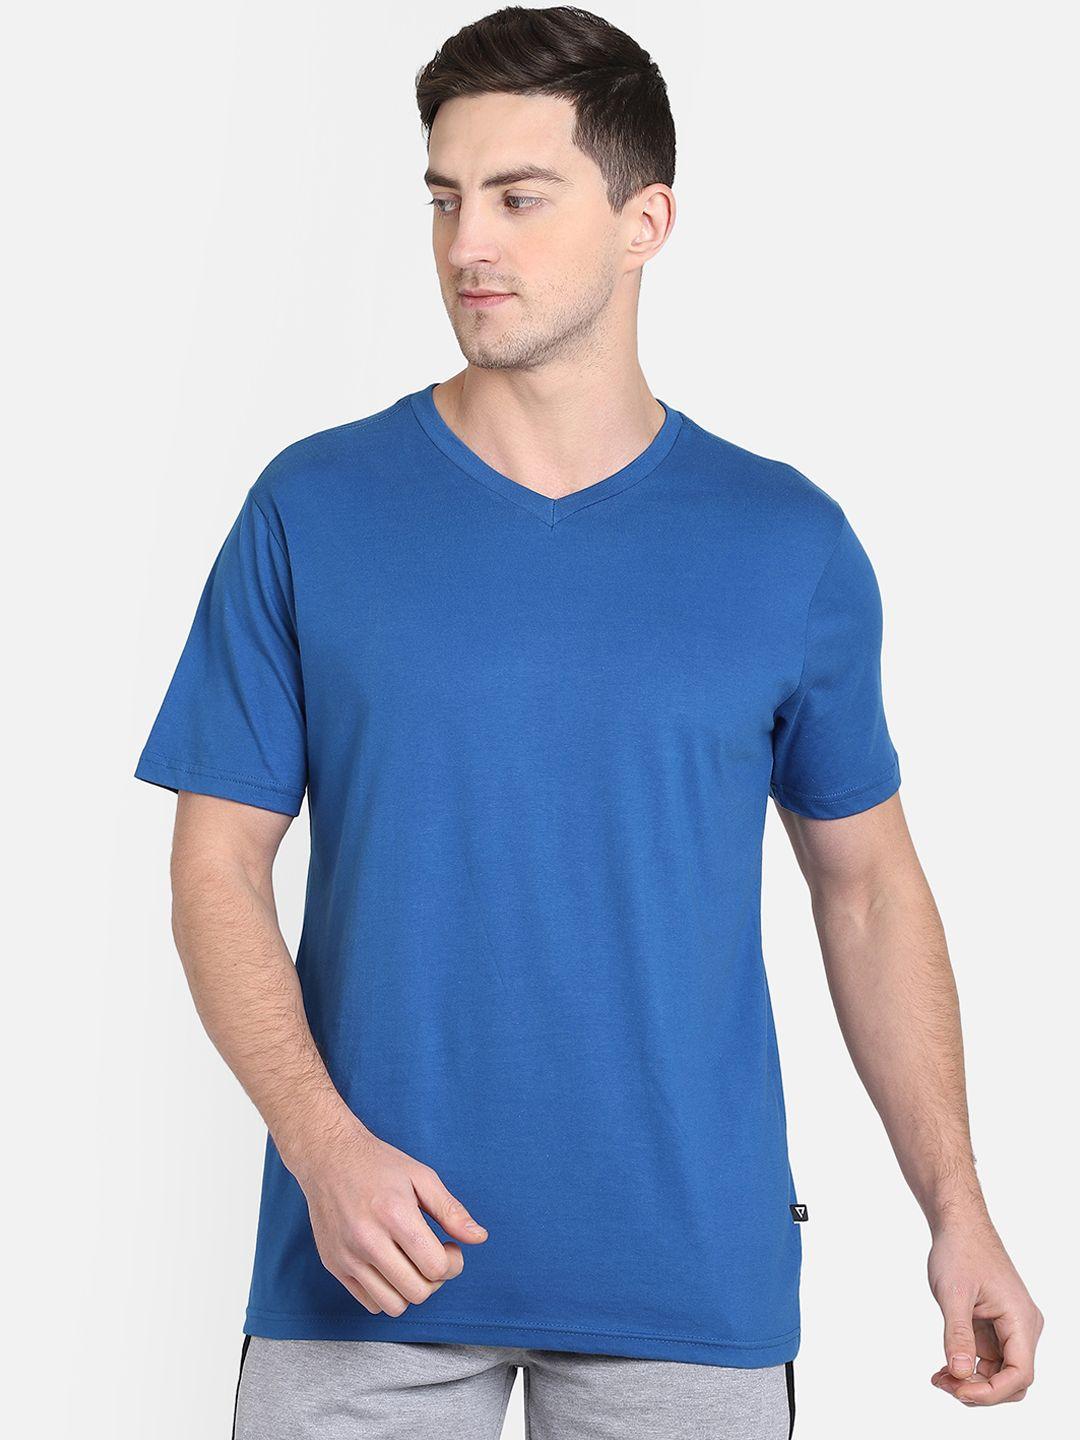 proteens men navy blue solid v-neck t-shirt